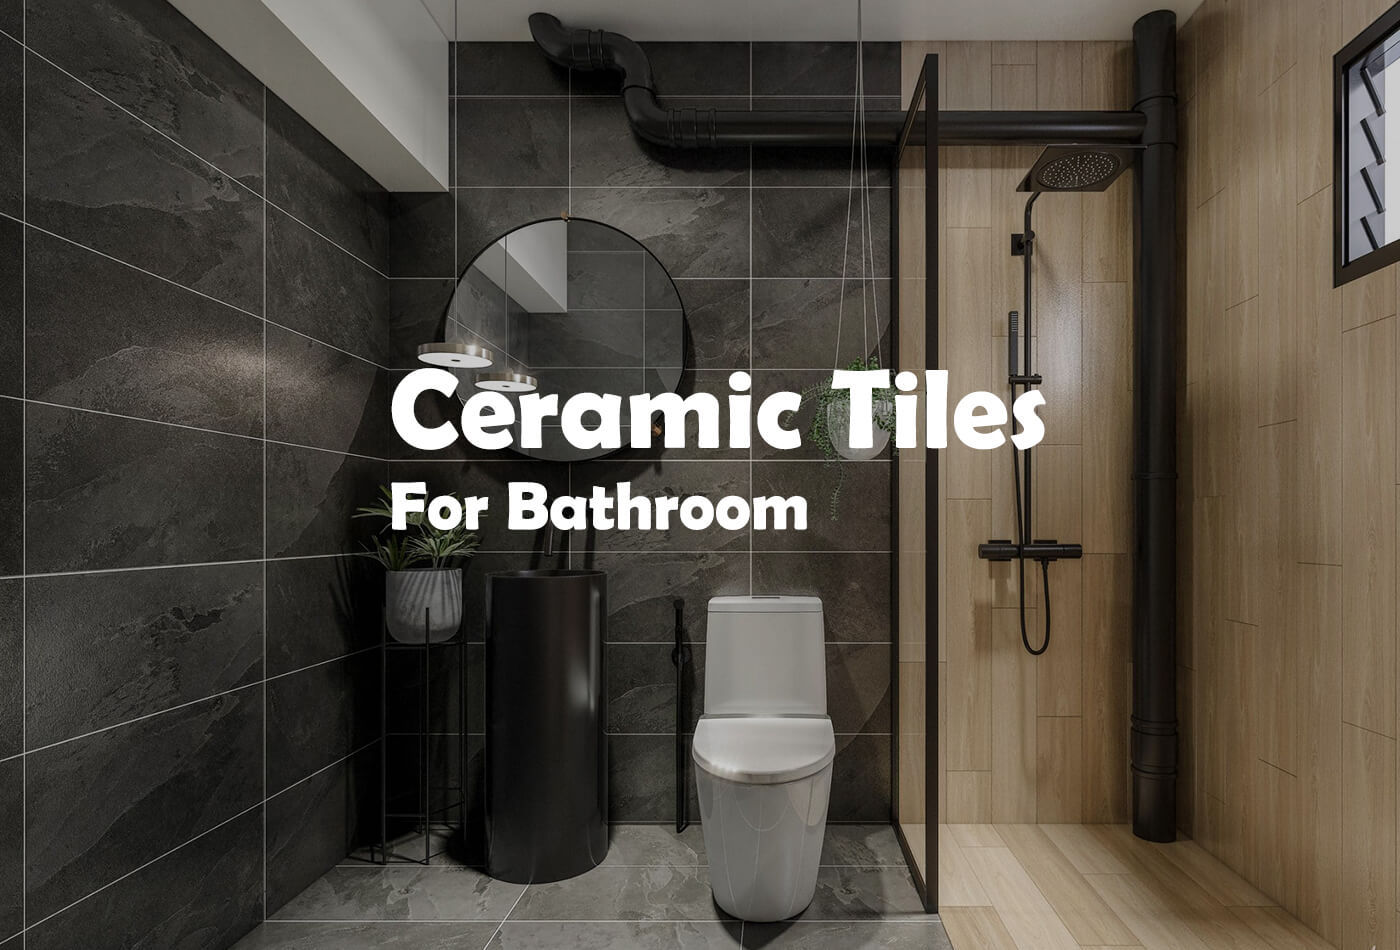 Ceramic Tiles For Bathroom On Sale!